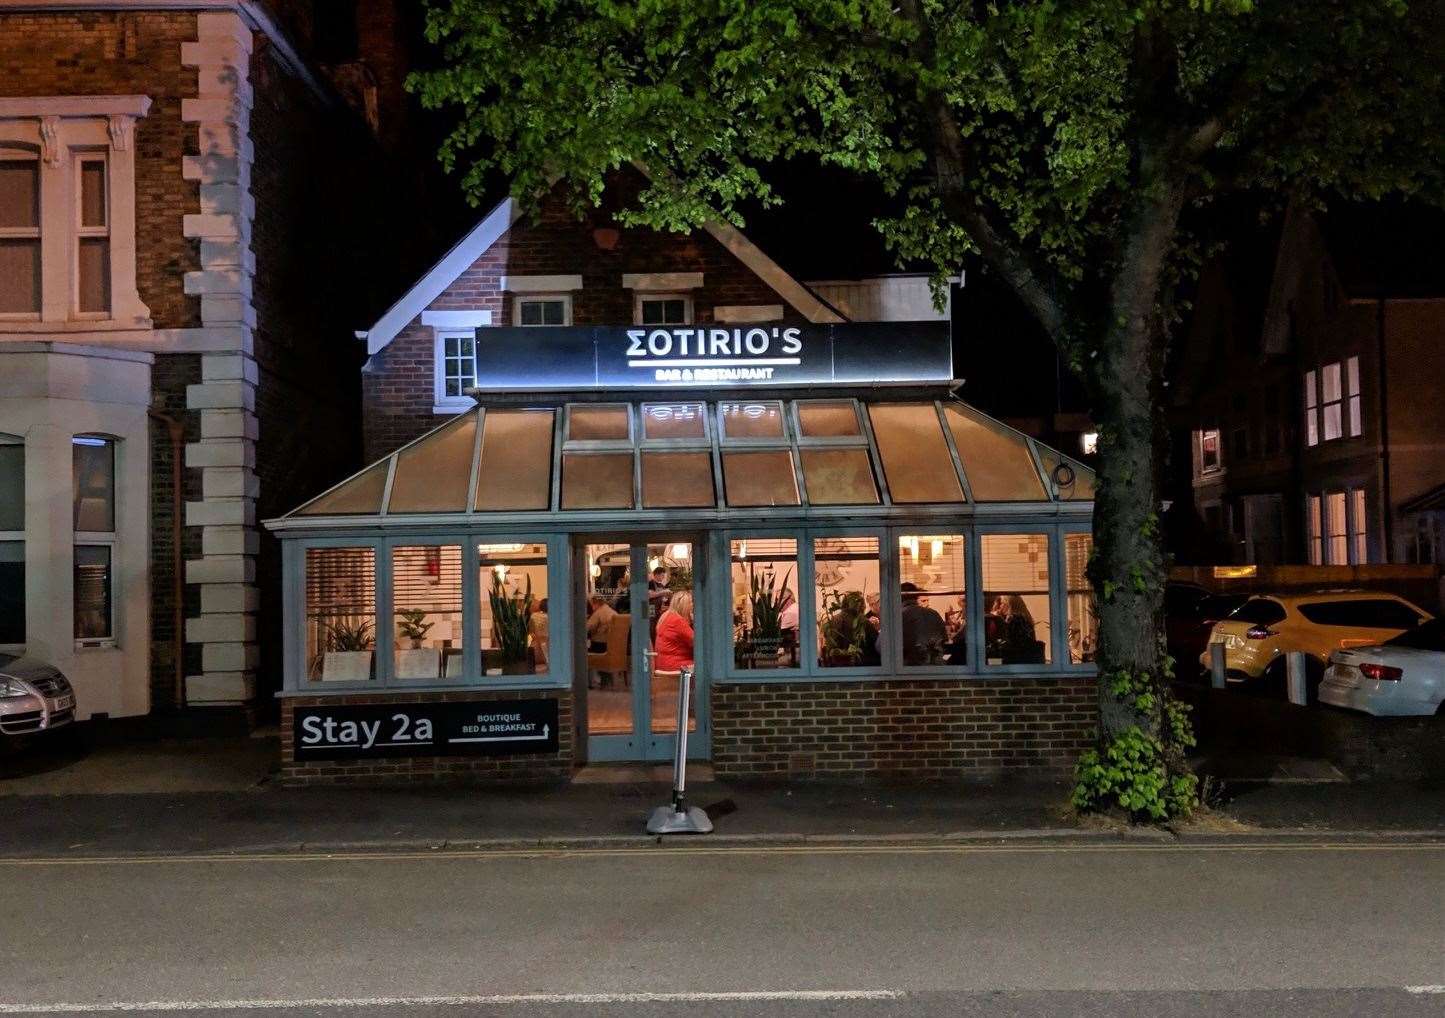 Sotirio’s Bar and Restaurant in Folkestone